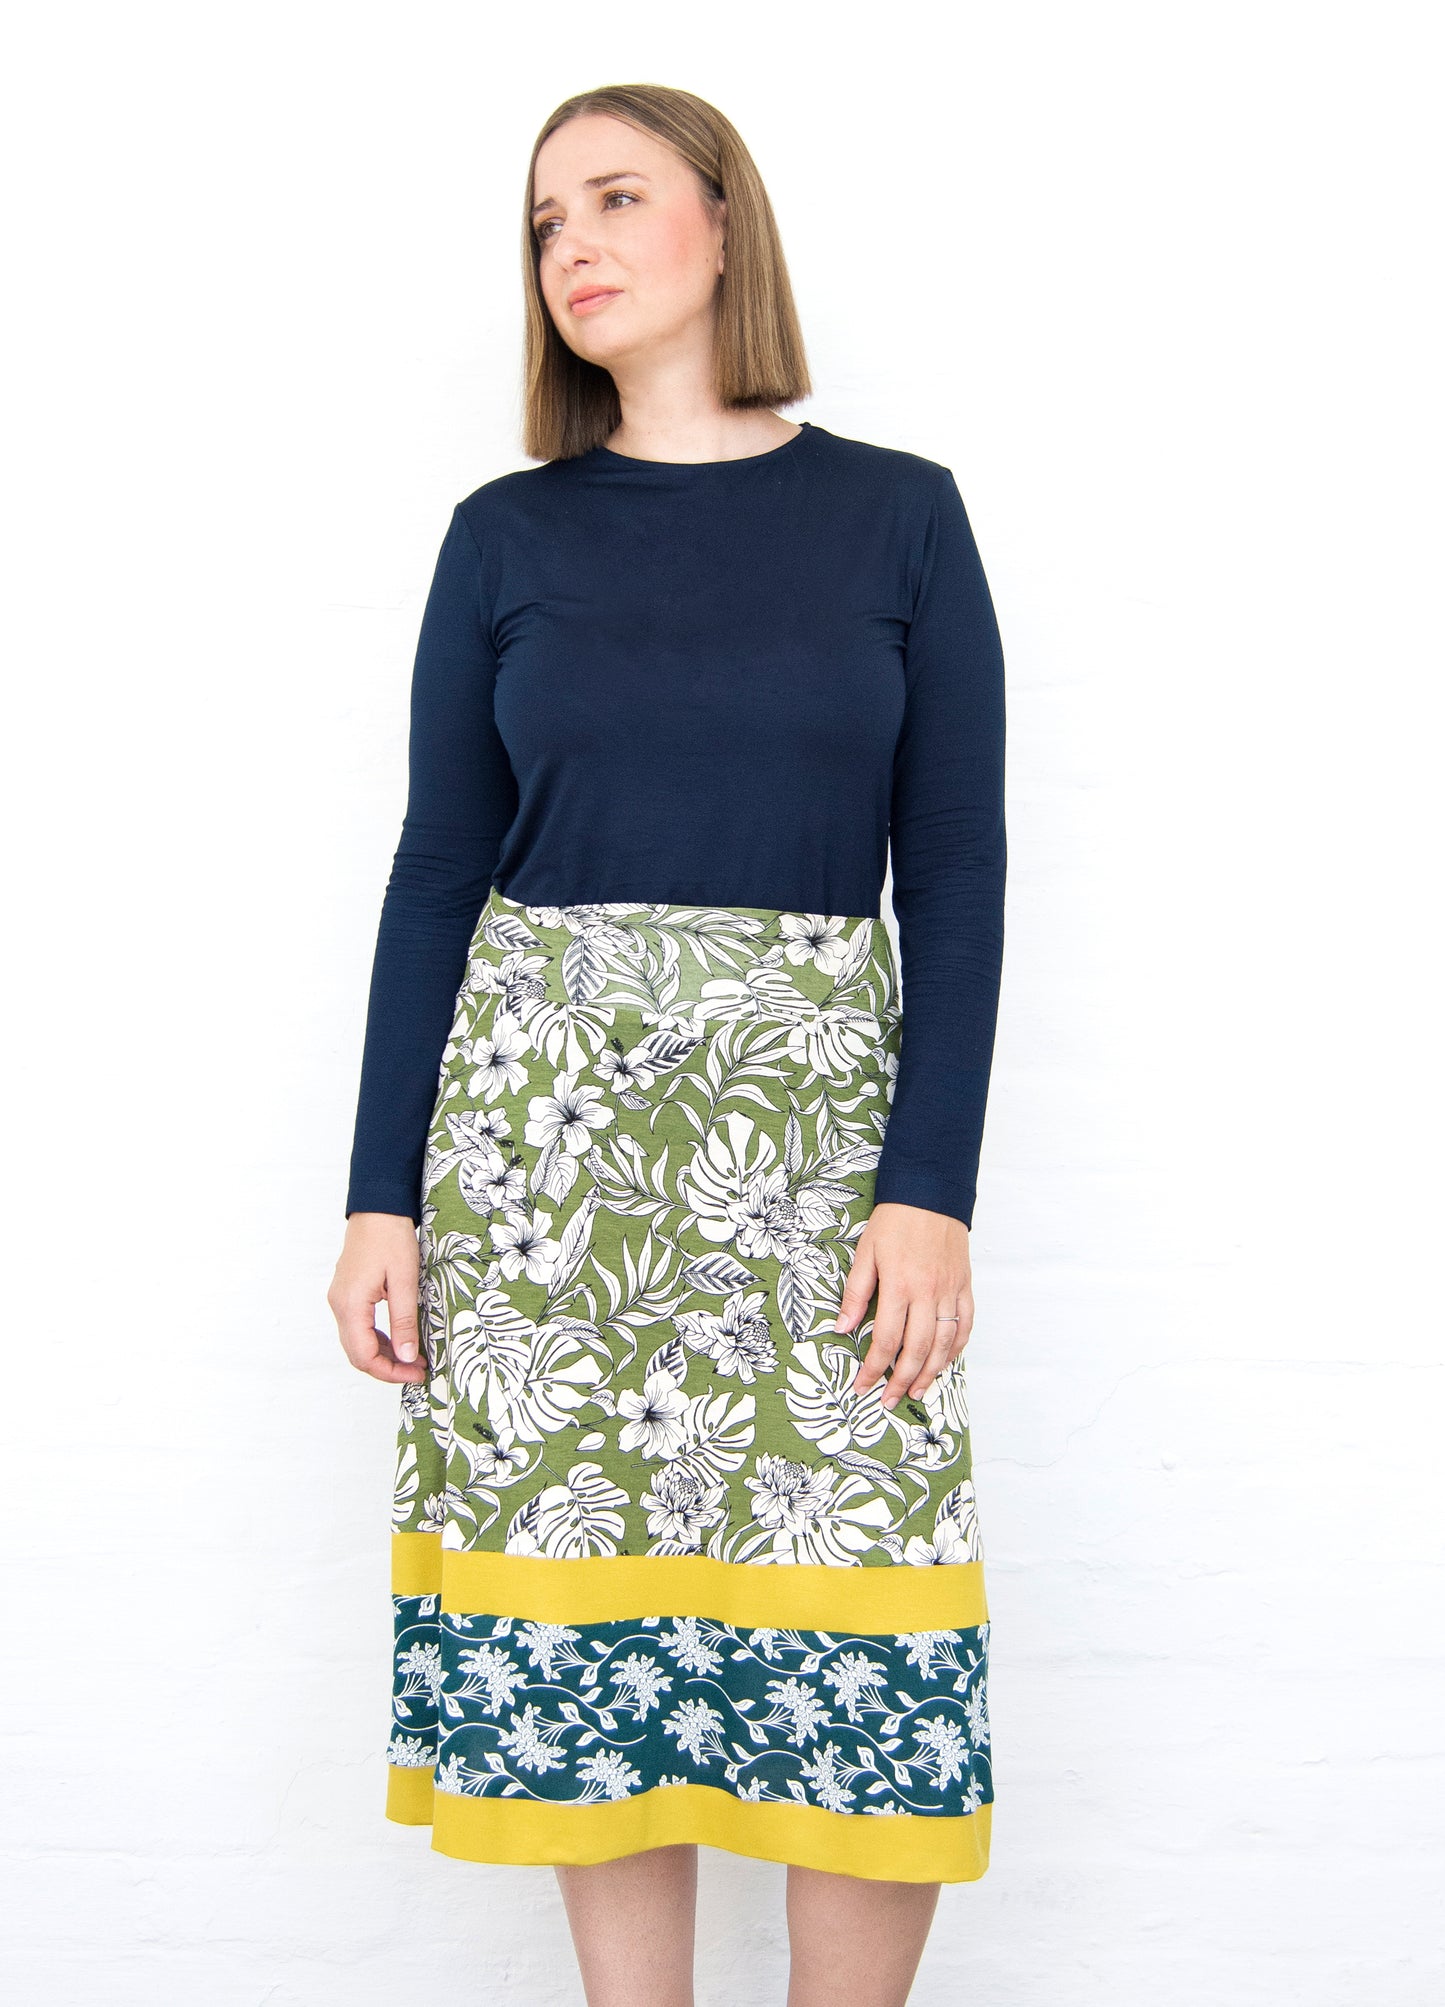 Dahlia Skirt in olive Carolina Floral